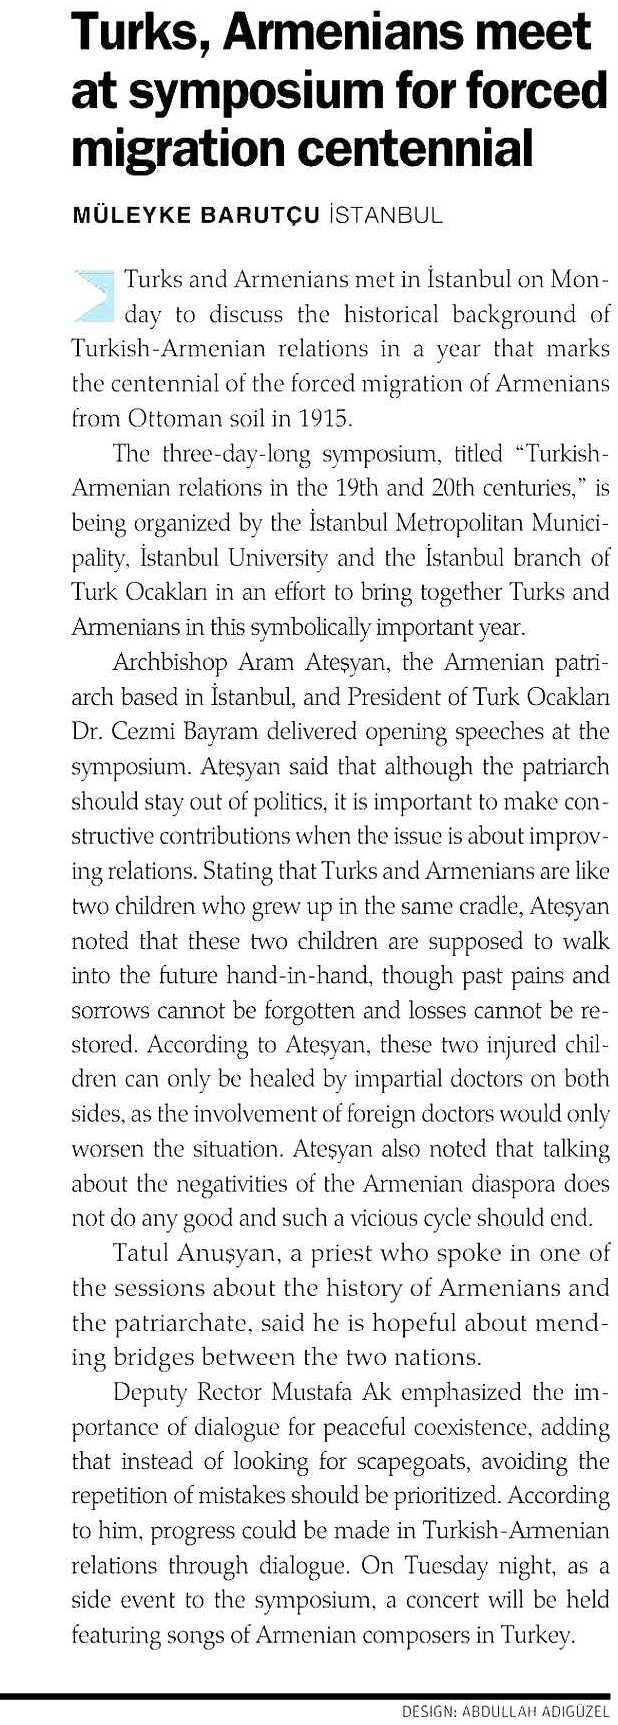 TURKS, ARMENIANS MEET AT SYMPOSIUM FOR FORCED MIGRATION CENTEN.